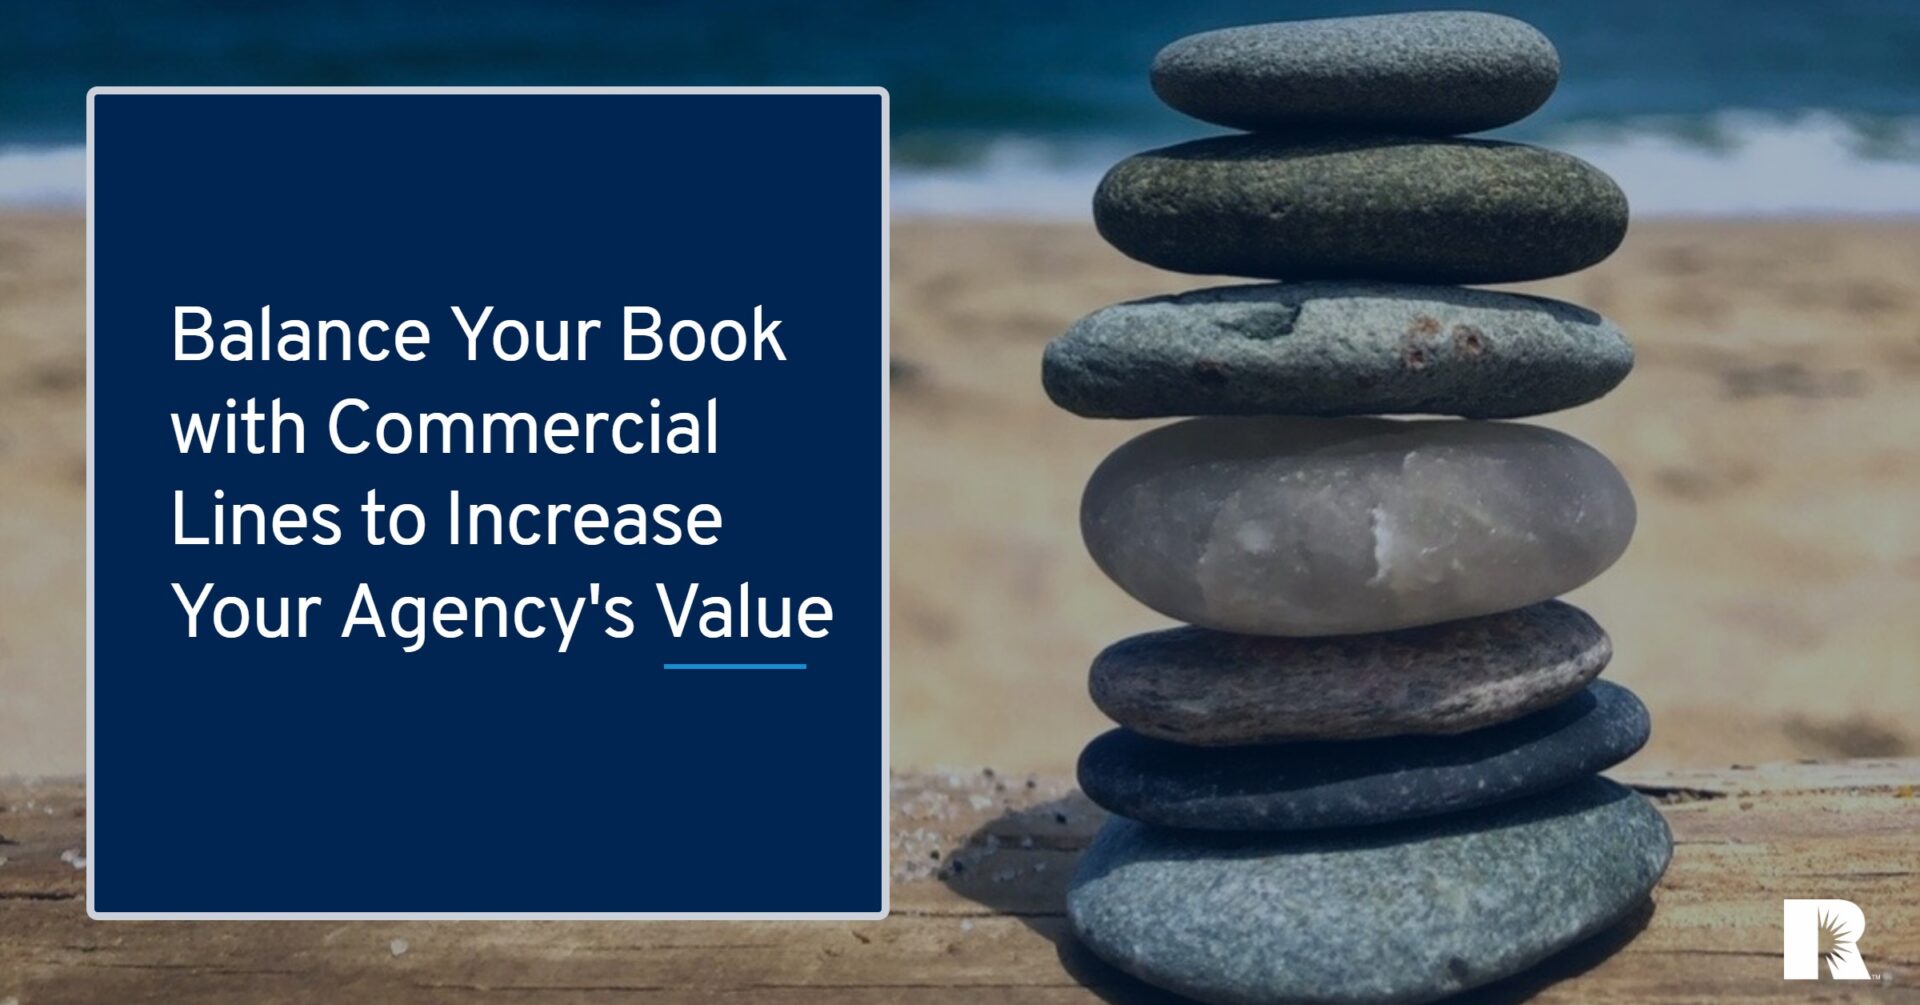 Balance Your Book Blog Image